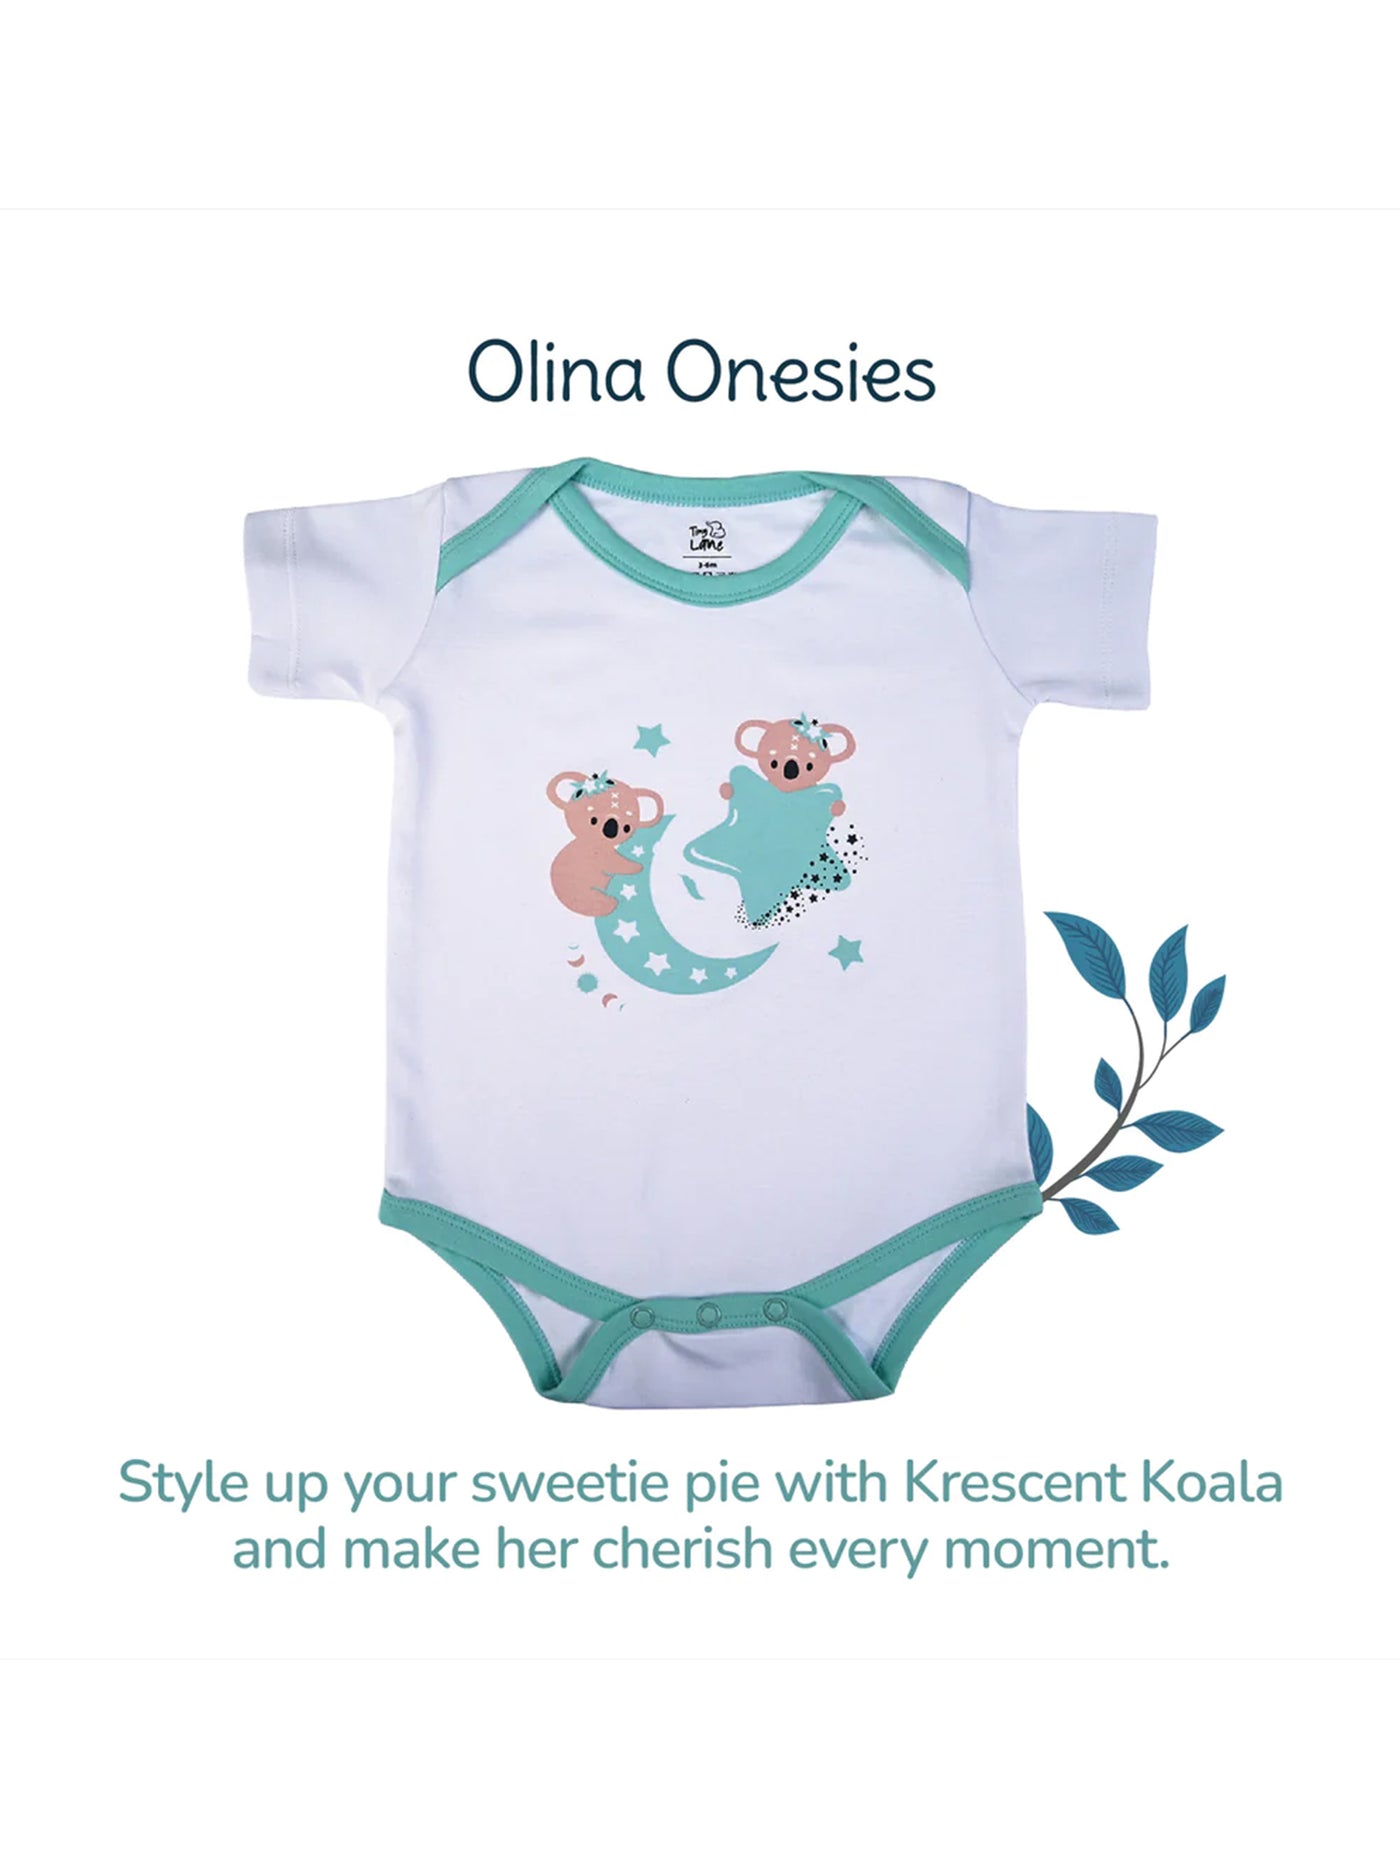 Tiny Lane Newborn Onesies - Honey Bunny + Krescent Koala (Pack of 2)